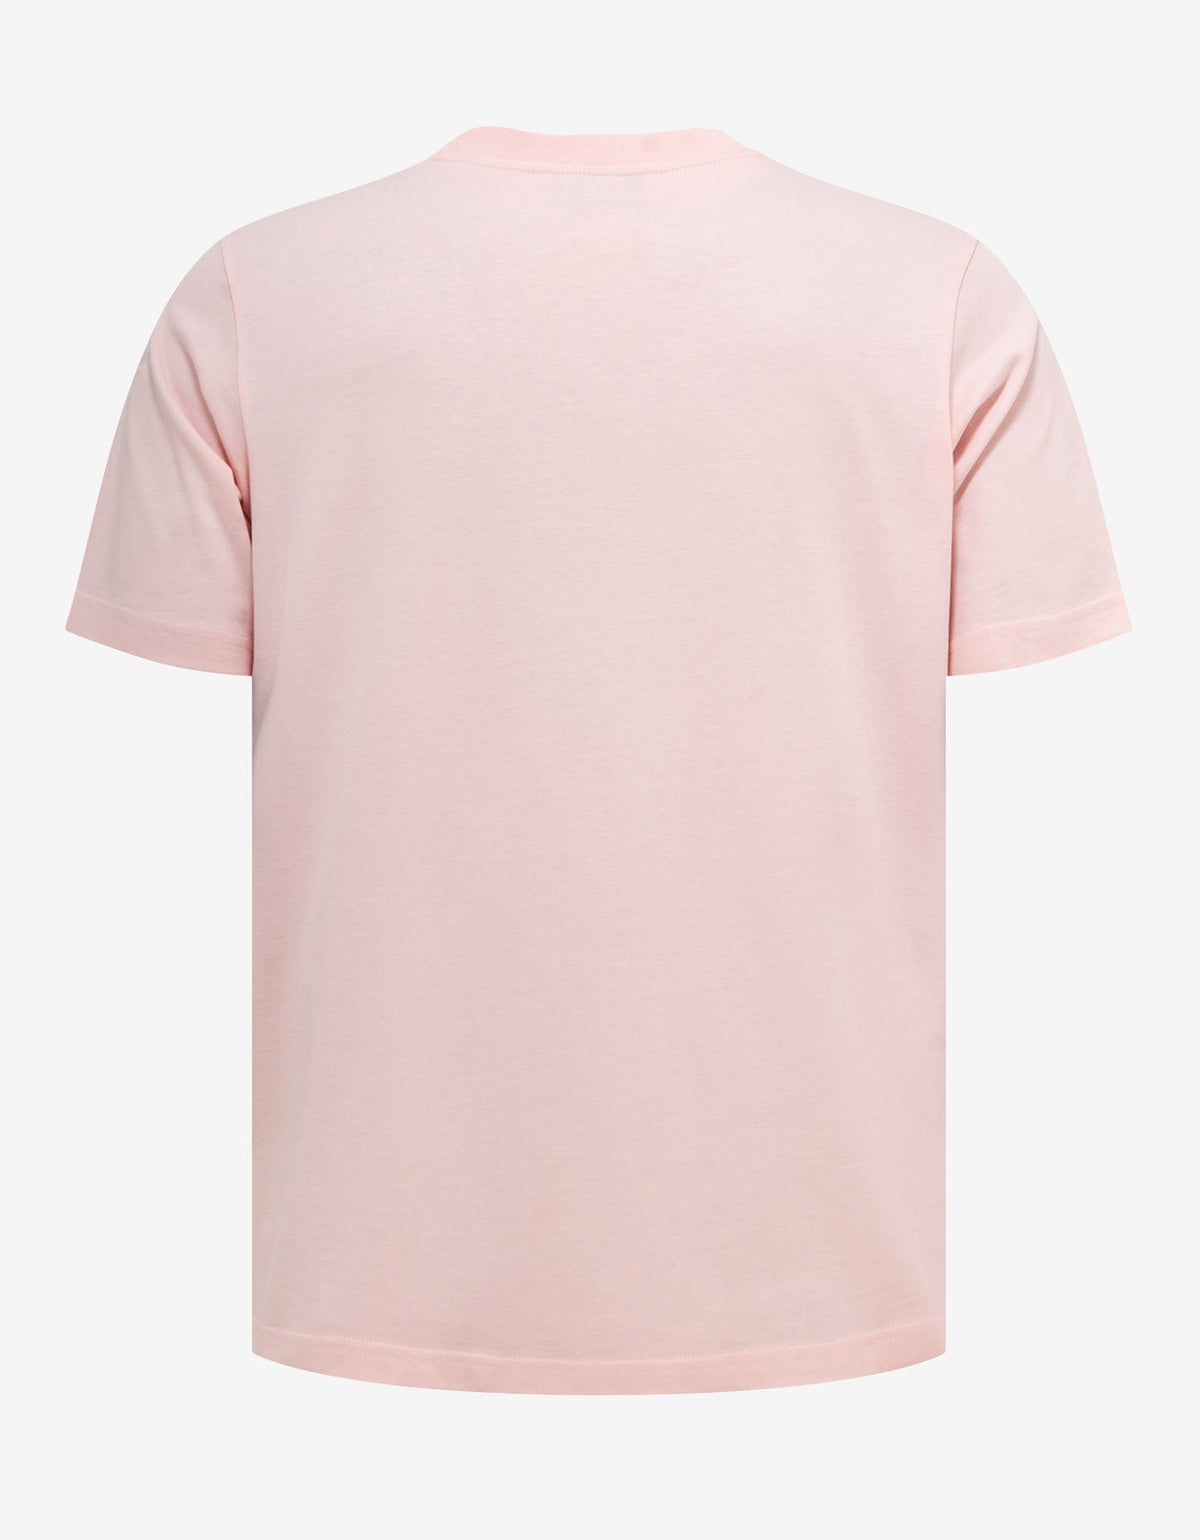 Casablanca Pink La Joueuse Print T-Shirt